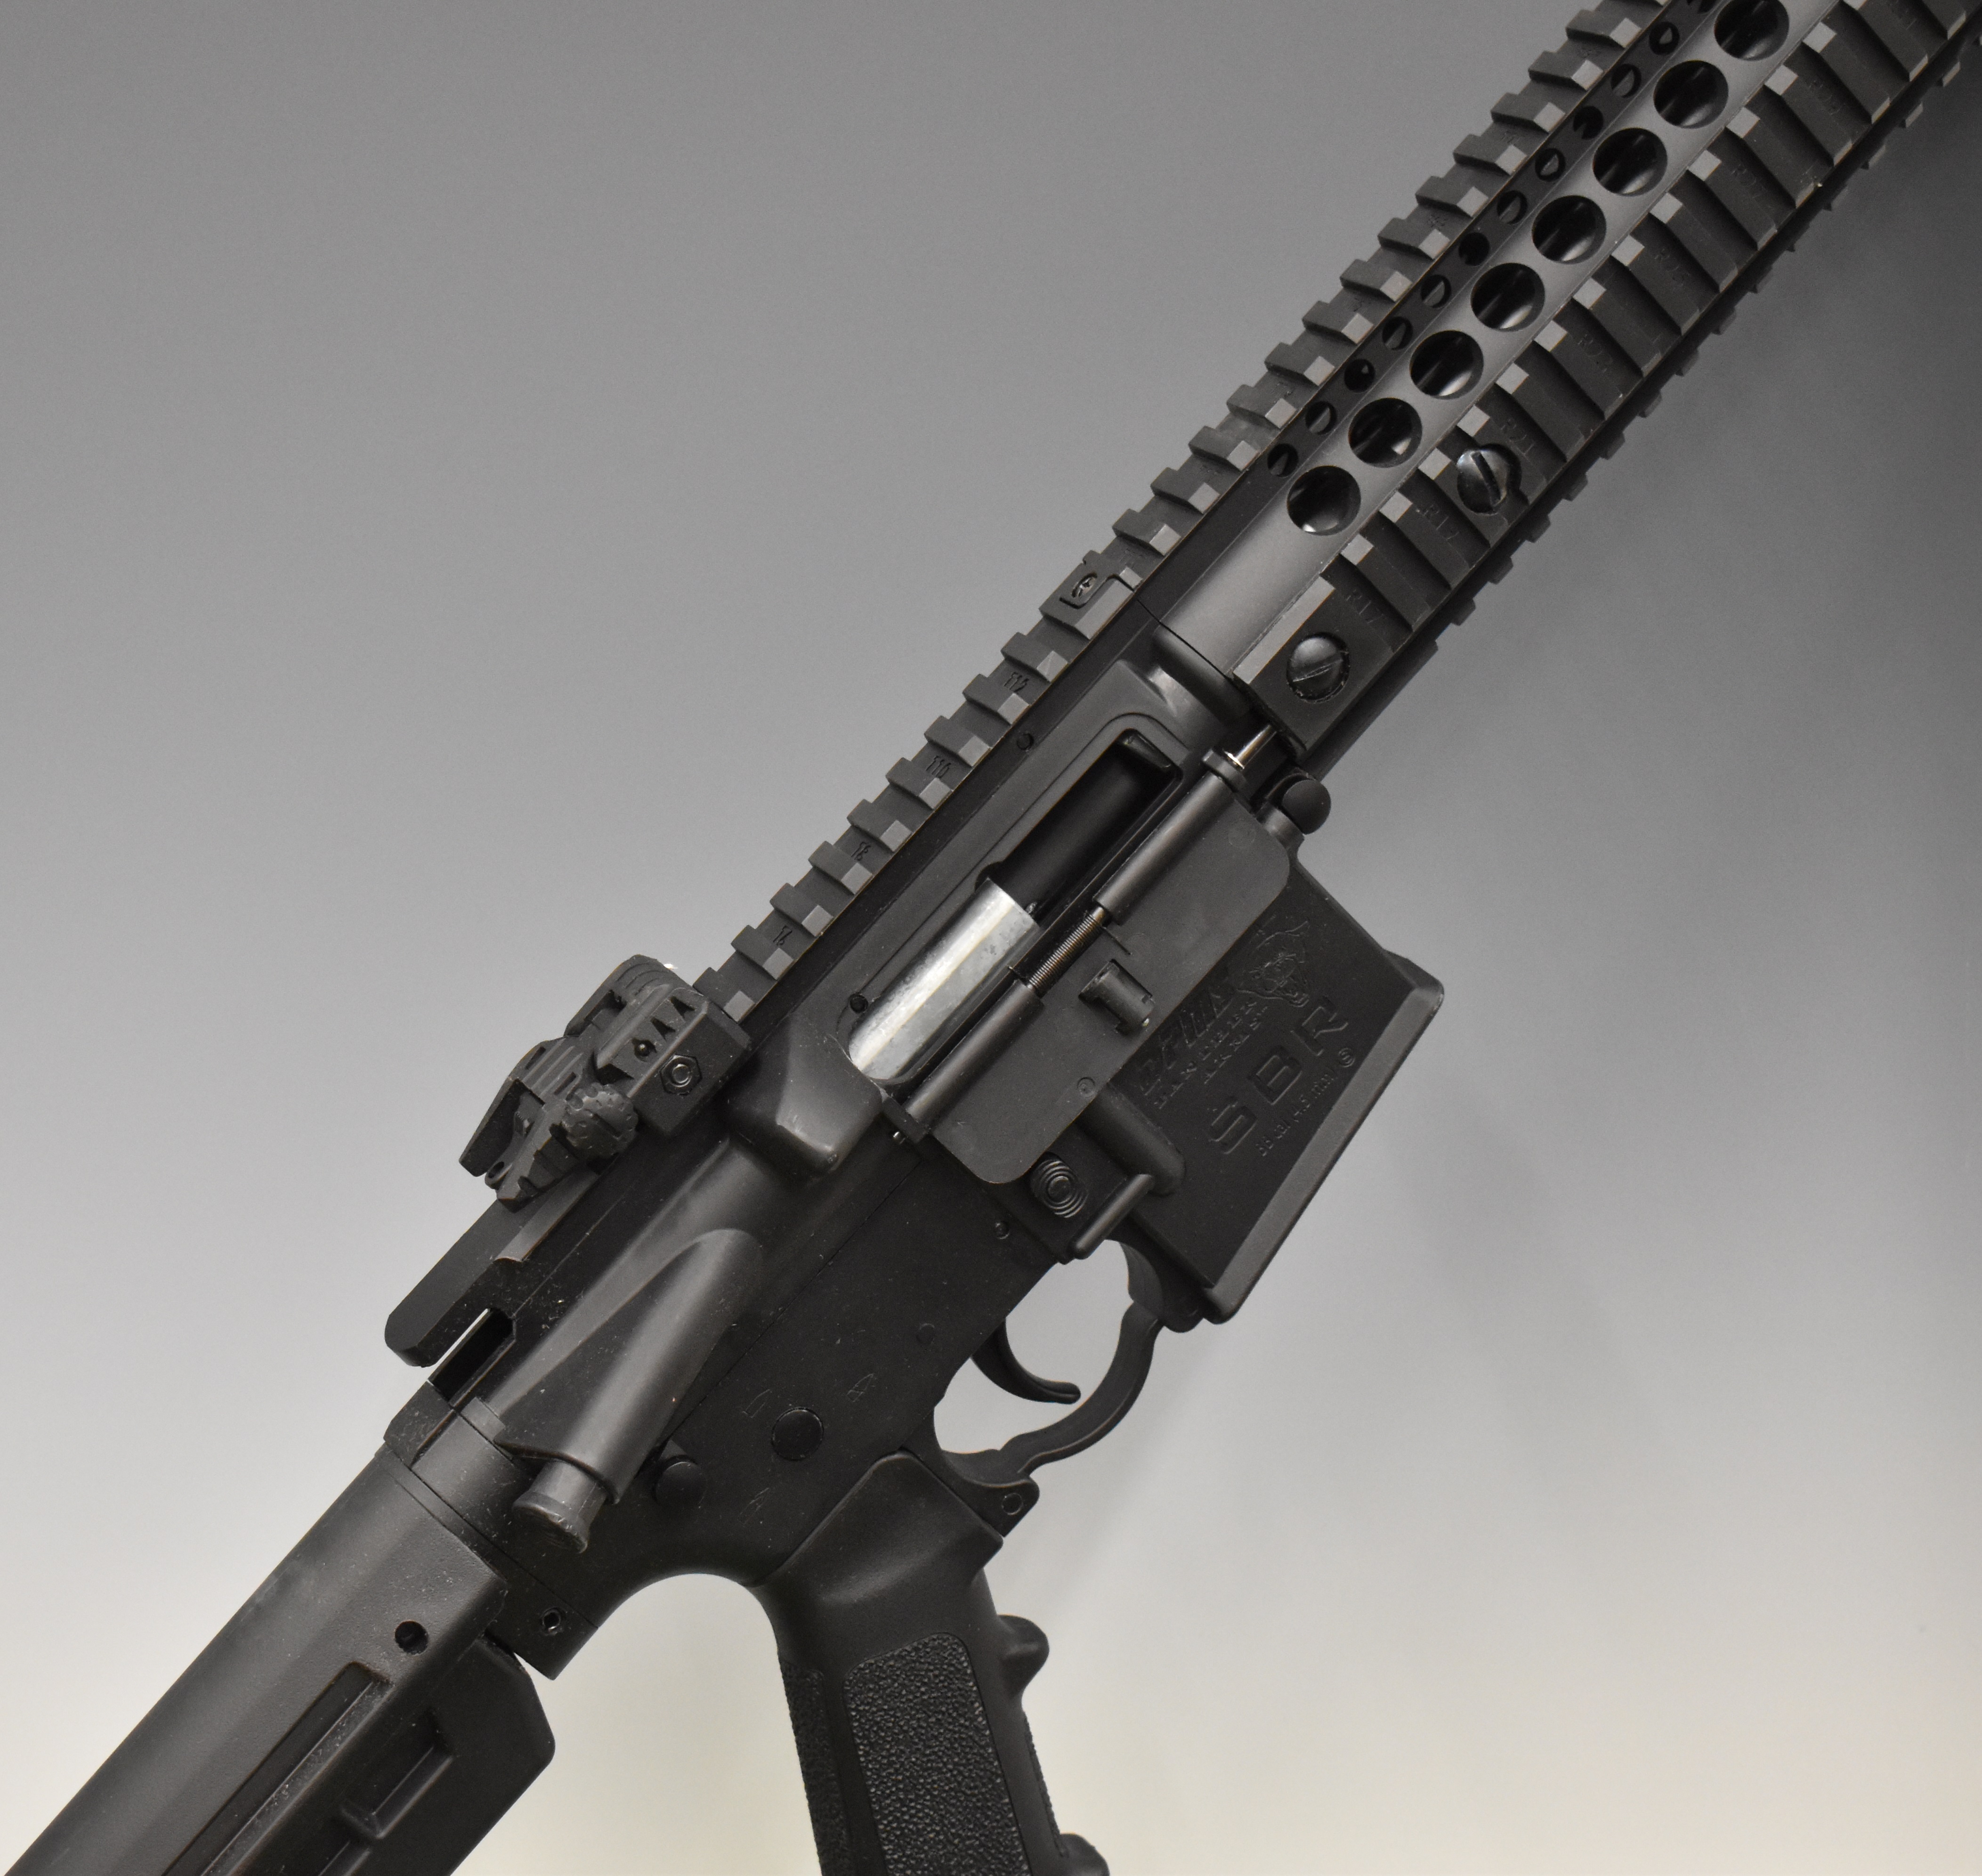 Crosman SBR .177 CO2 assault style air rifle with textured pistol grip, tactical stock, multi-shot